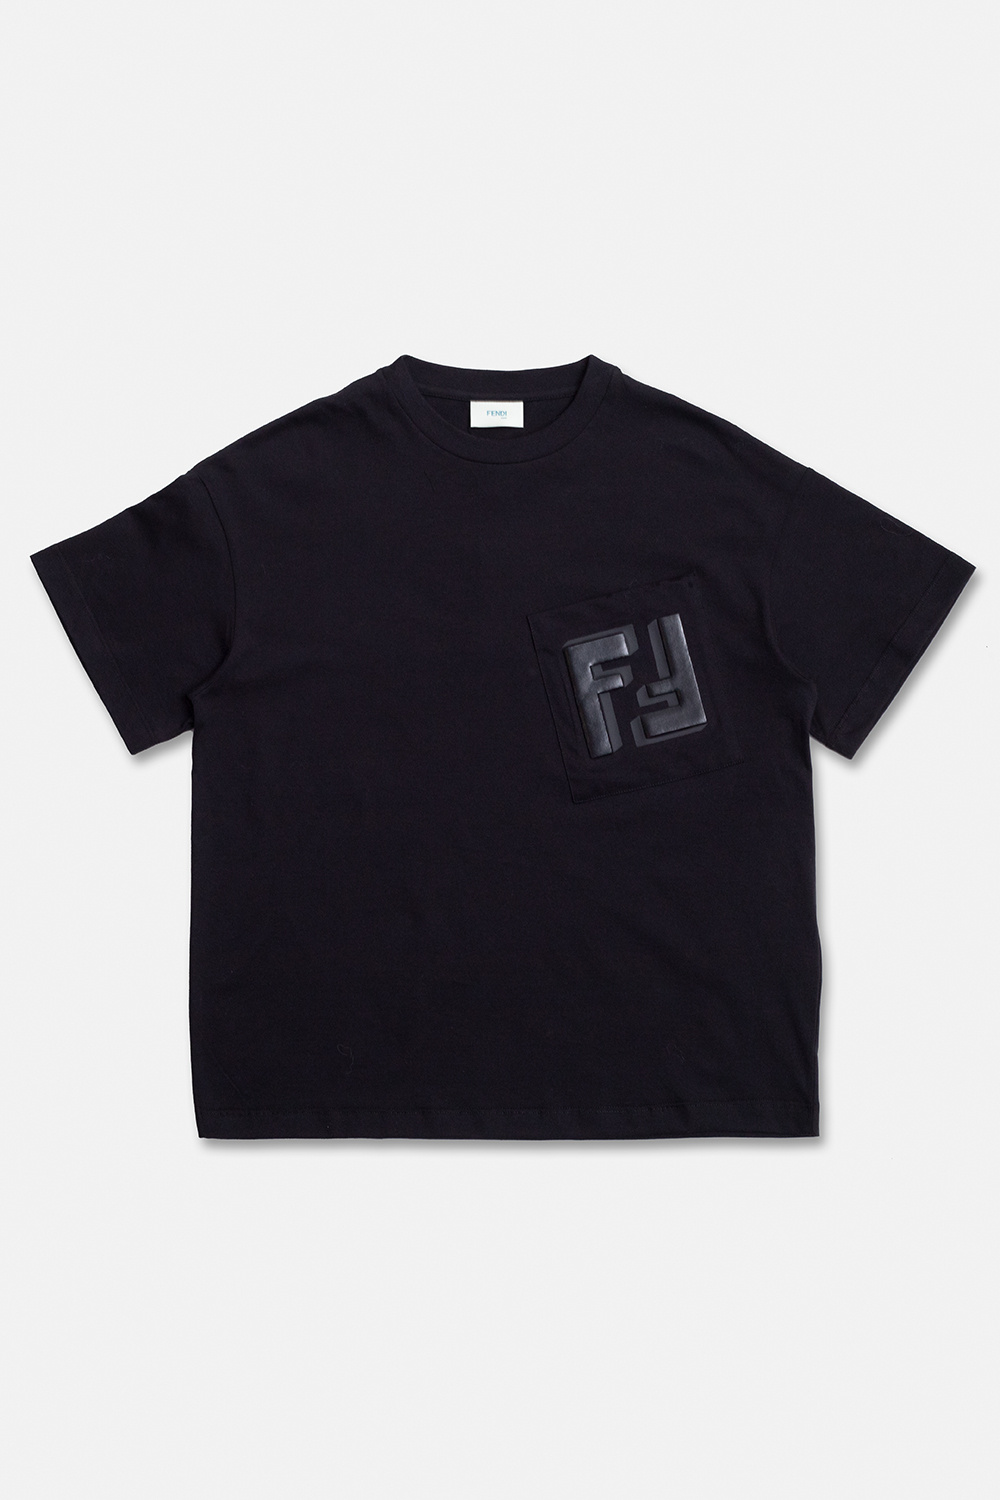 Fendi Kids fendi floral print logo t shirt item